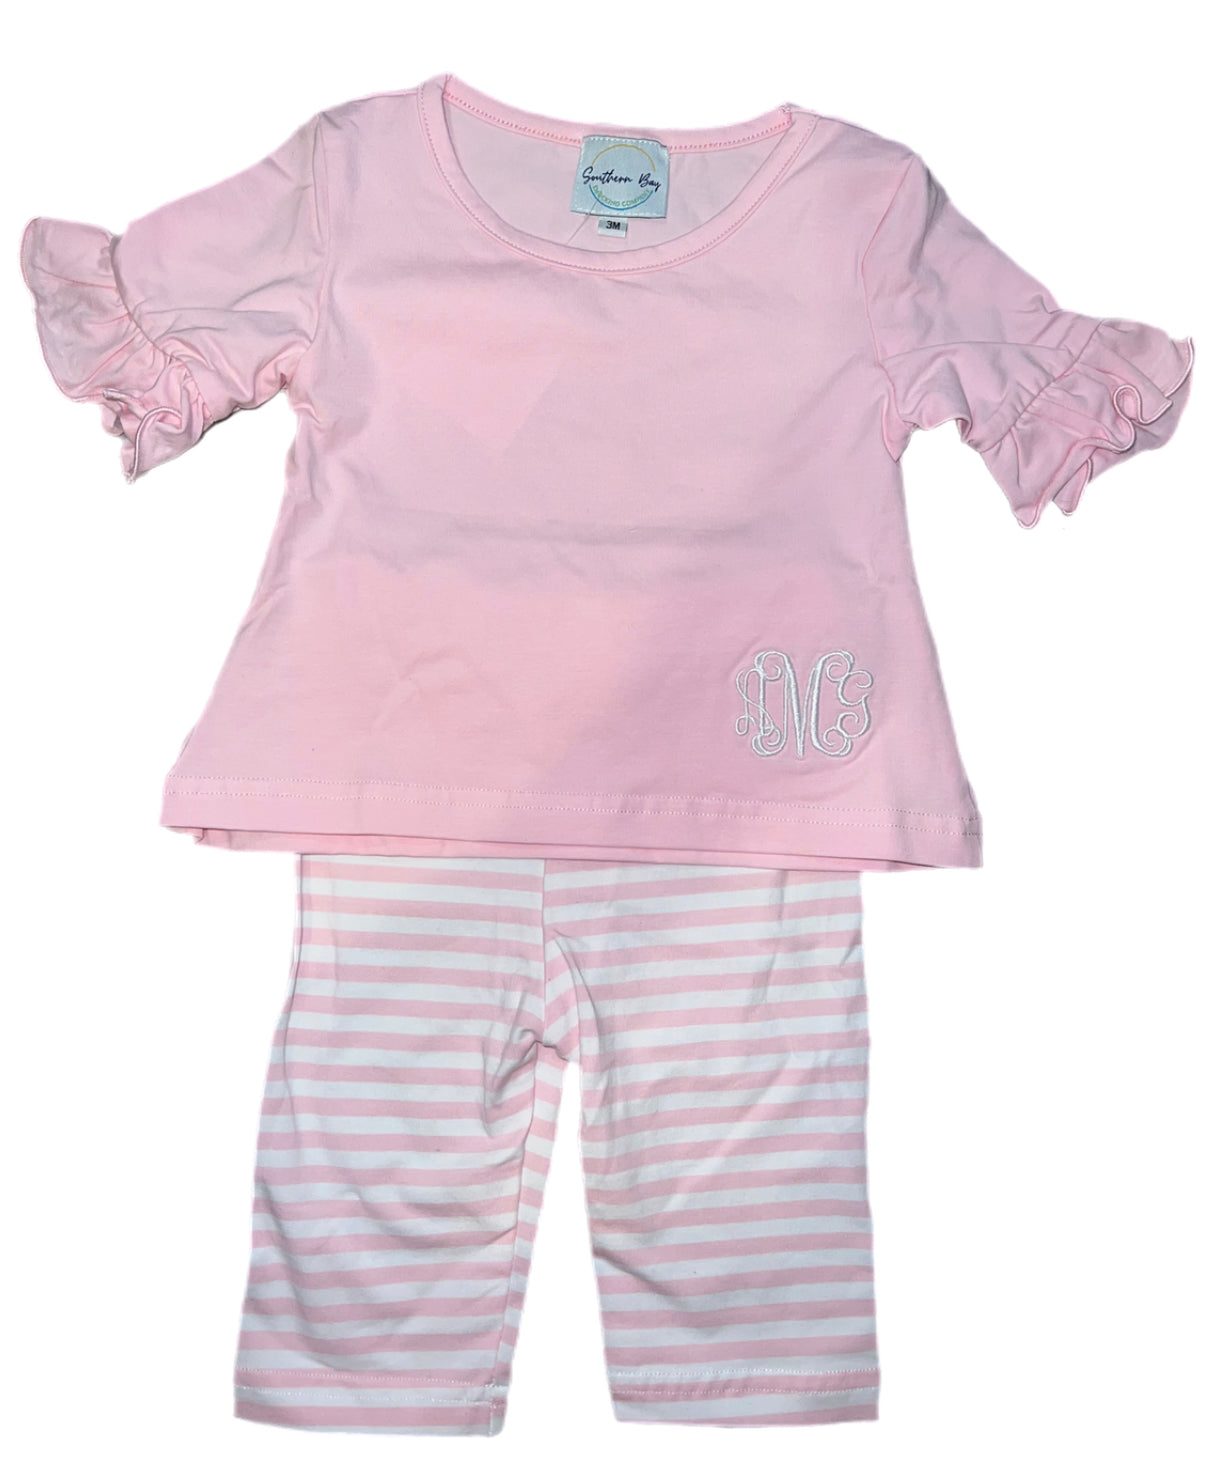 RTS: SBSC- Girls Pink & White Stripe Knit Pant Set “AMG”